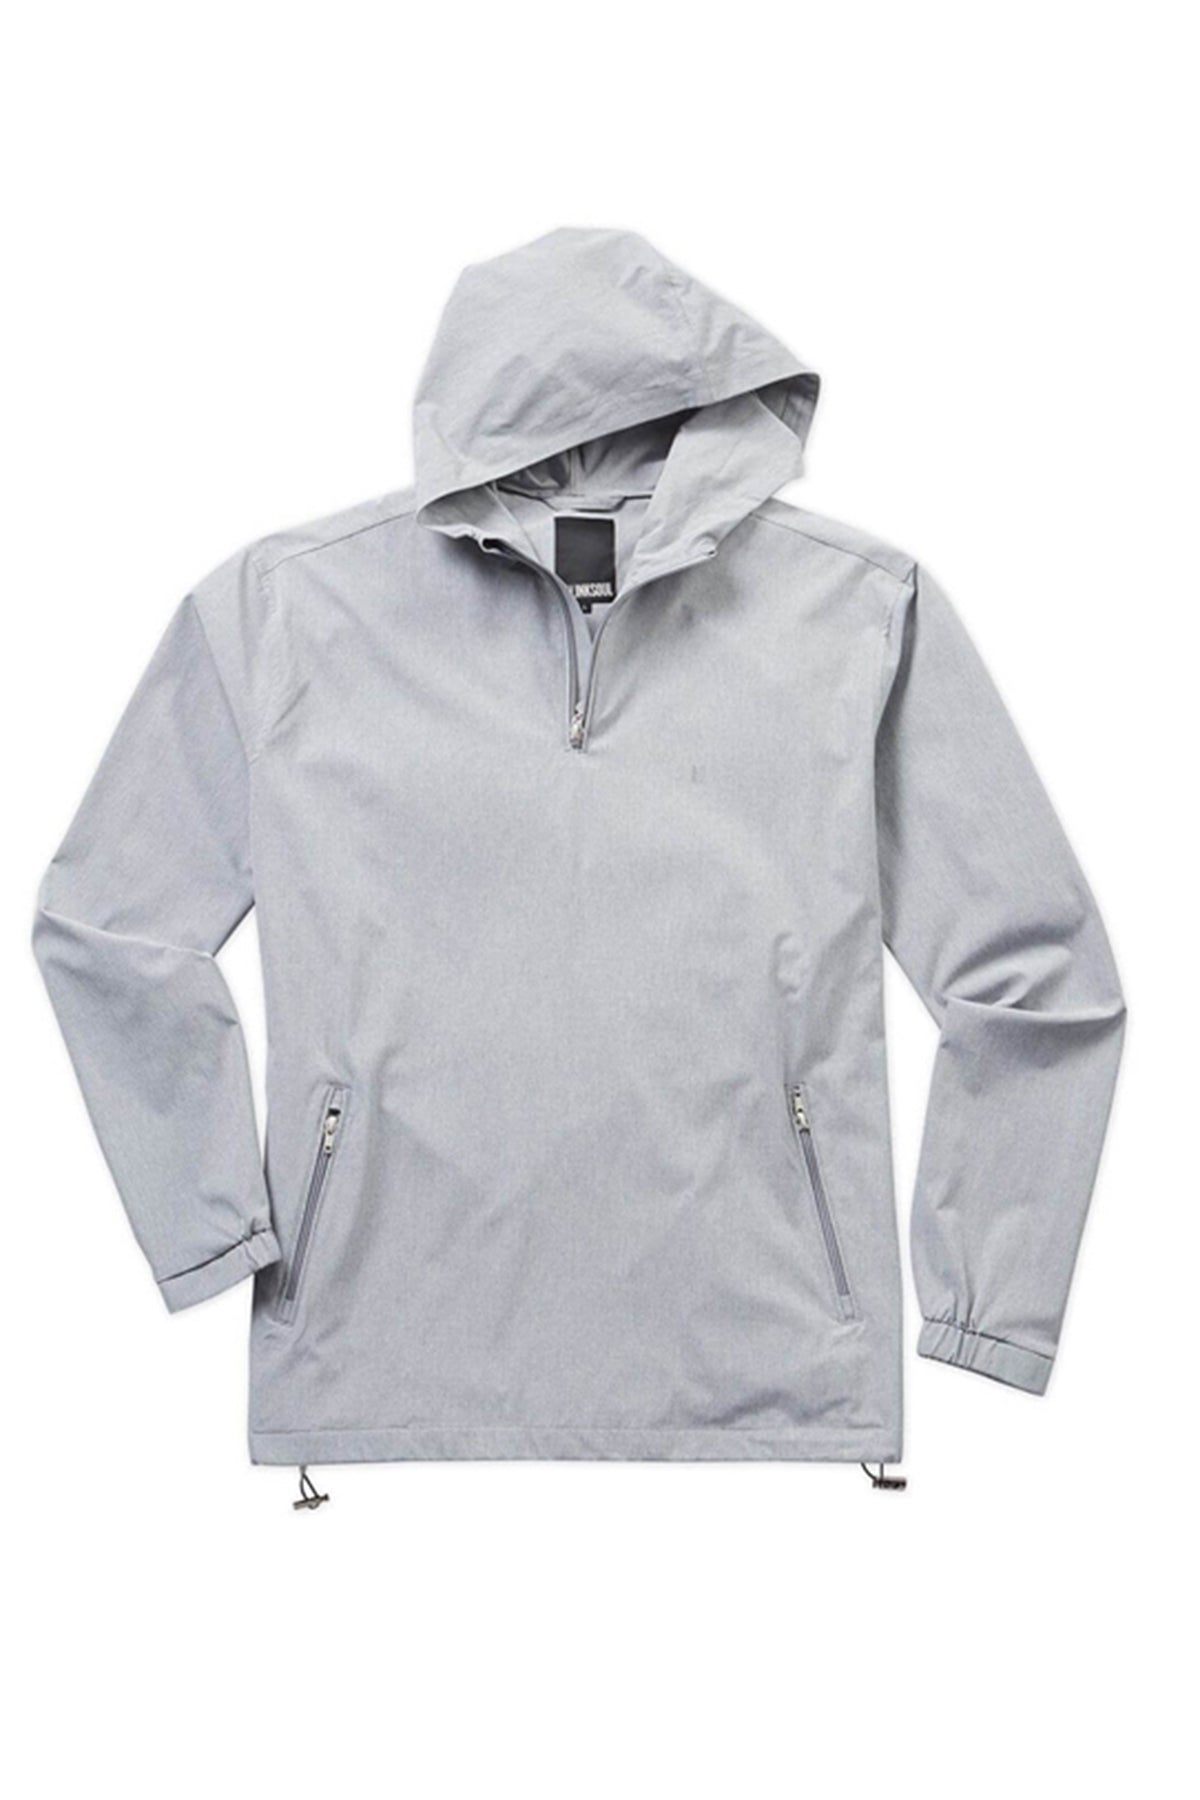 Linksoul Grey LS562 custom logo jackets